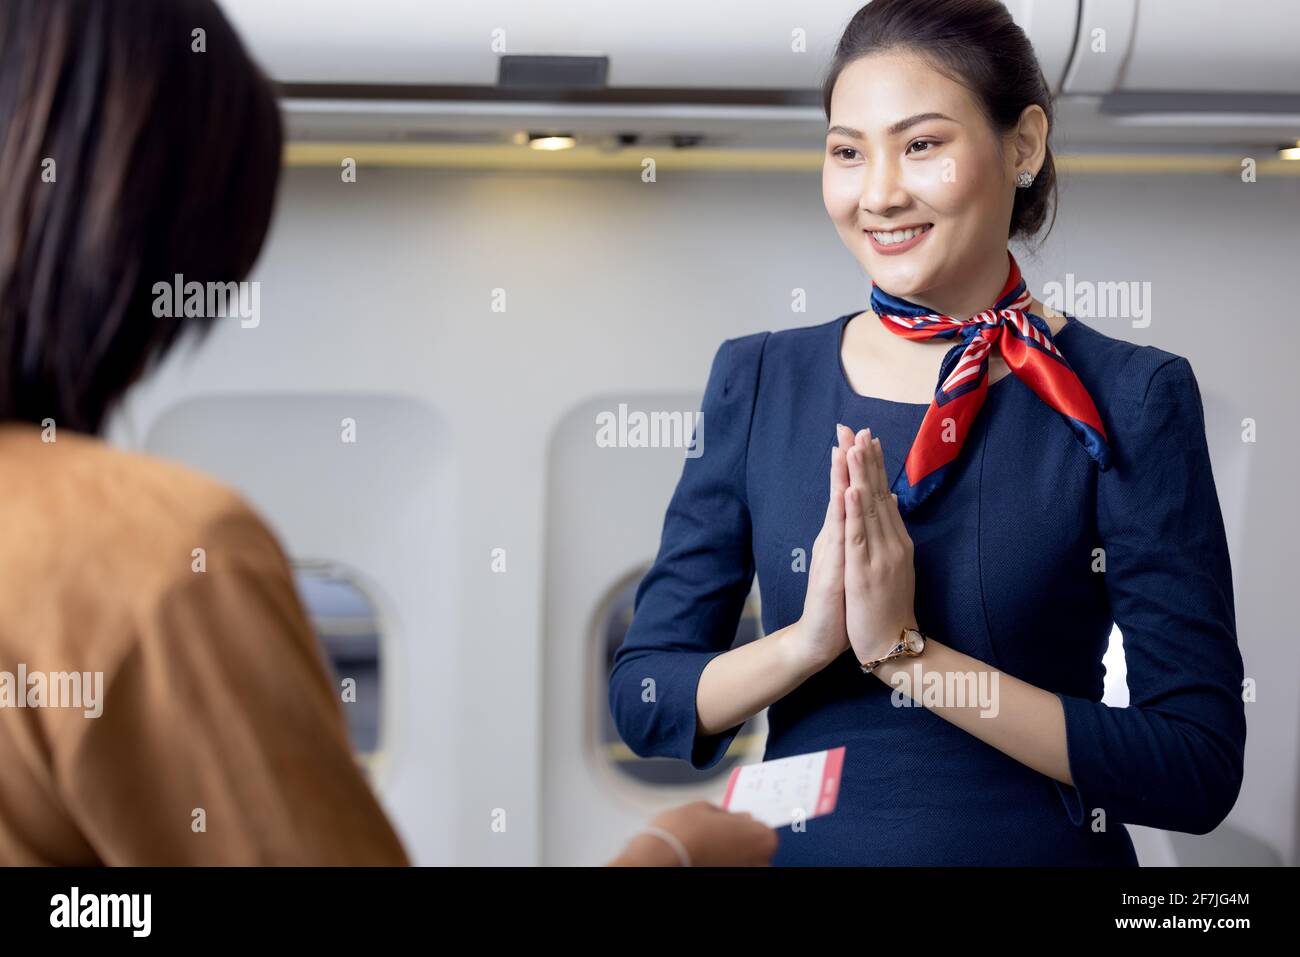 Cabin crew or Stewardess greeting passengers on airplane, Air hostess or stewardess service Stock Photo